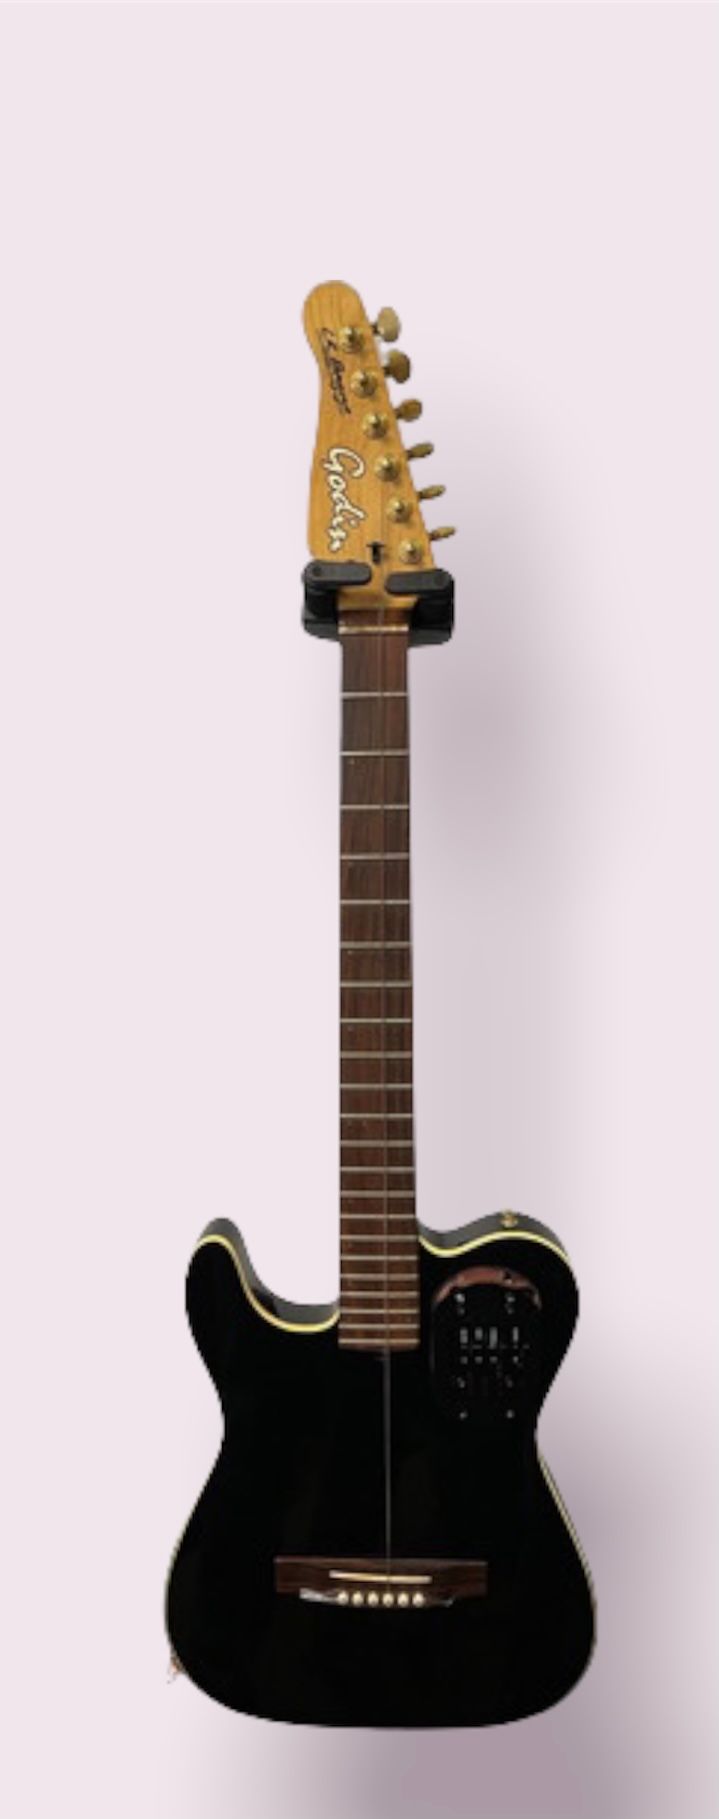 Null 电吉他，GODIN LR Baggs（左手型号）。

黑色，编号13486，加拿大制造

待维修（压电式传感器失灵）。